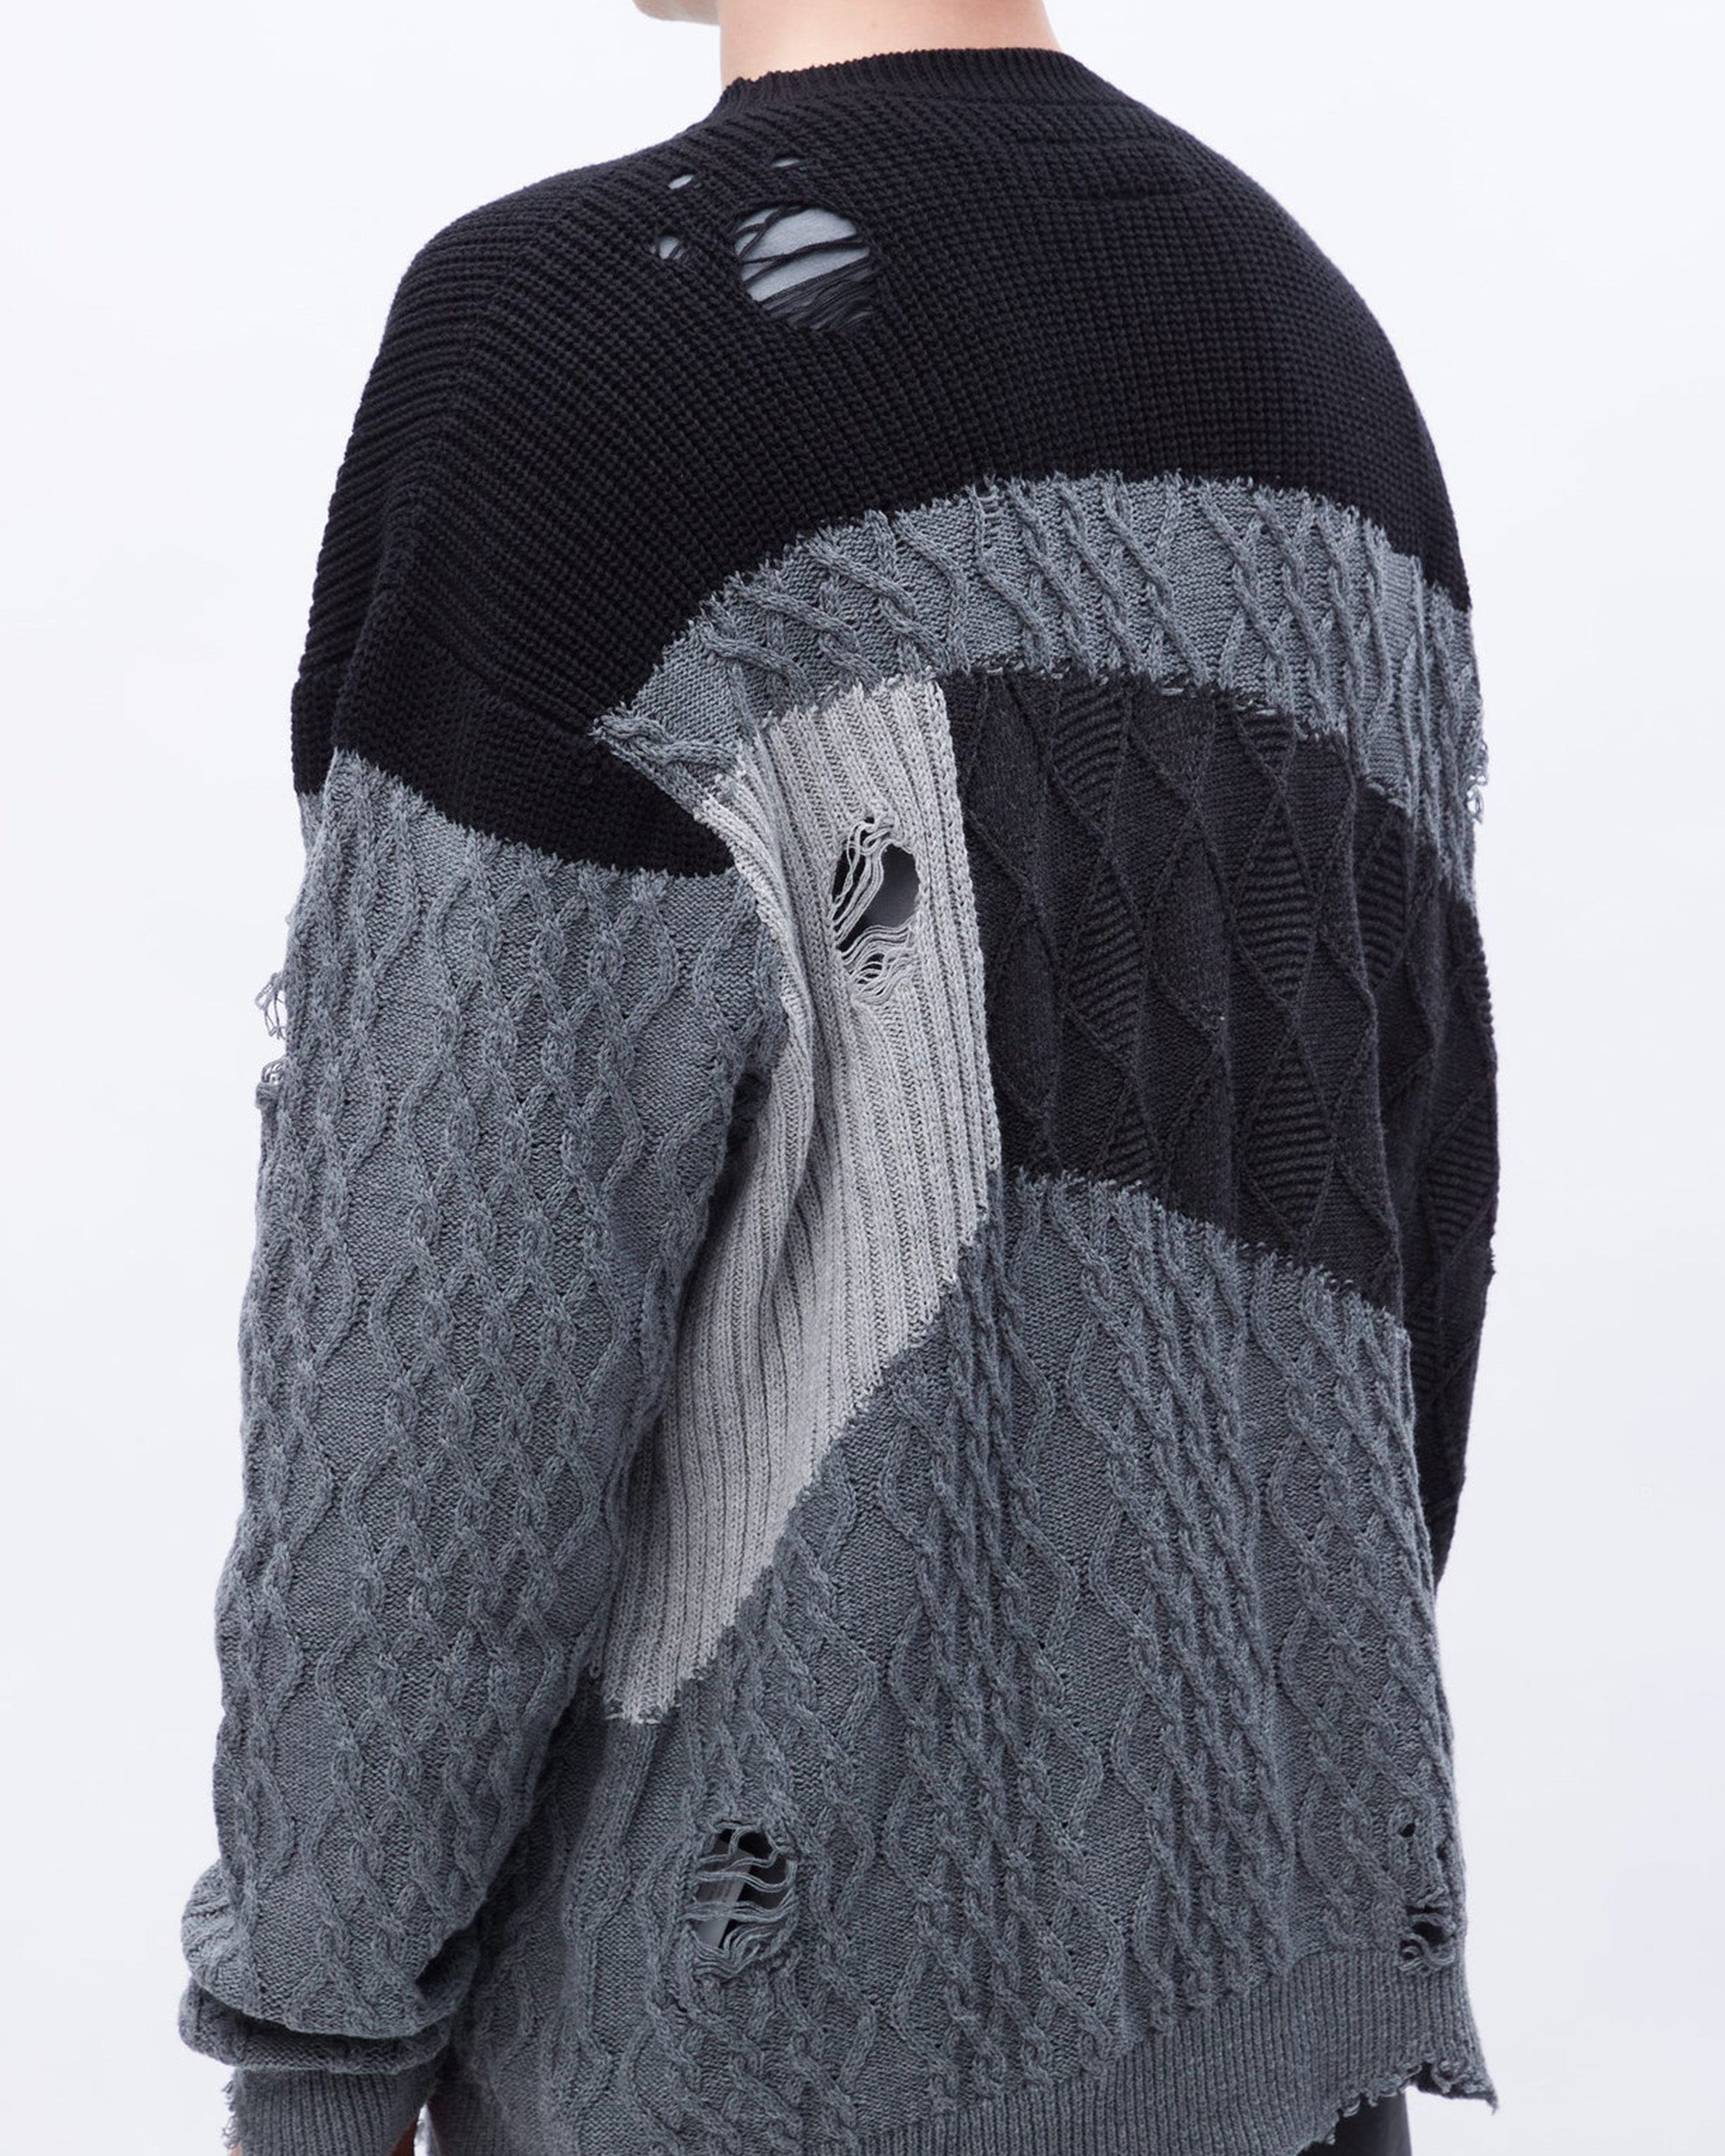 Patchwork Sweater - Black